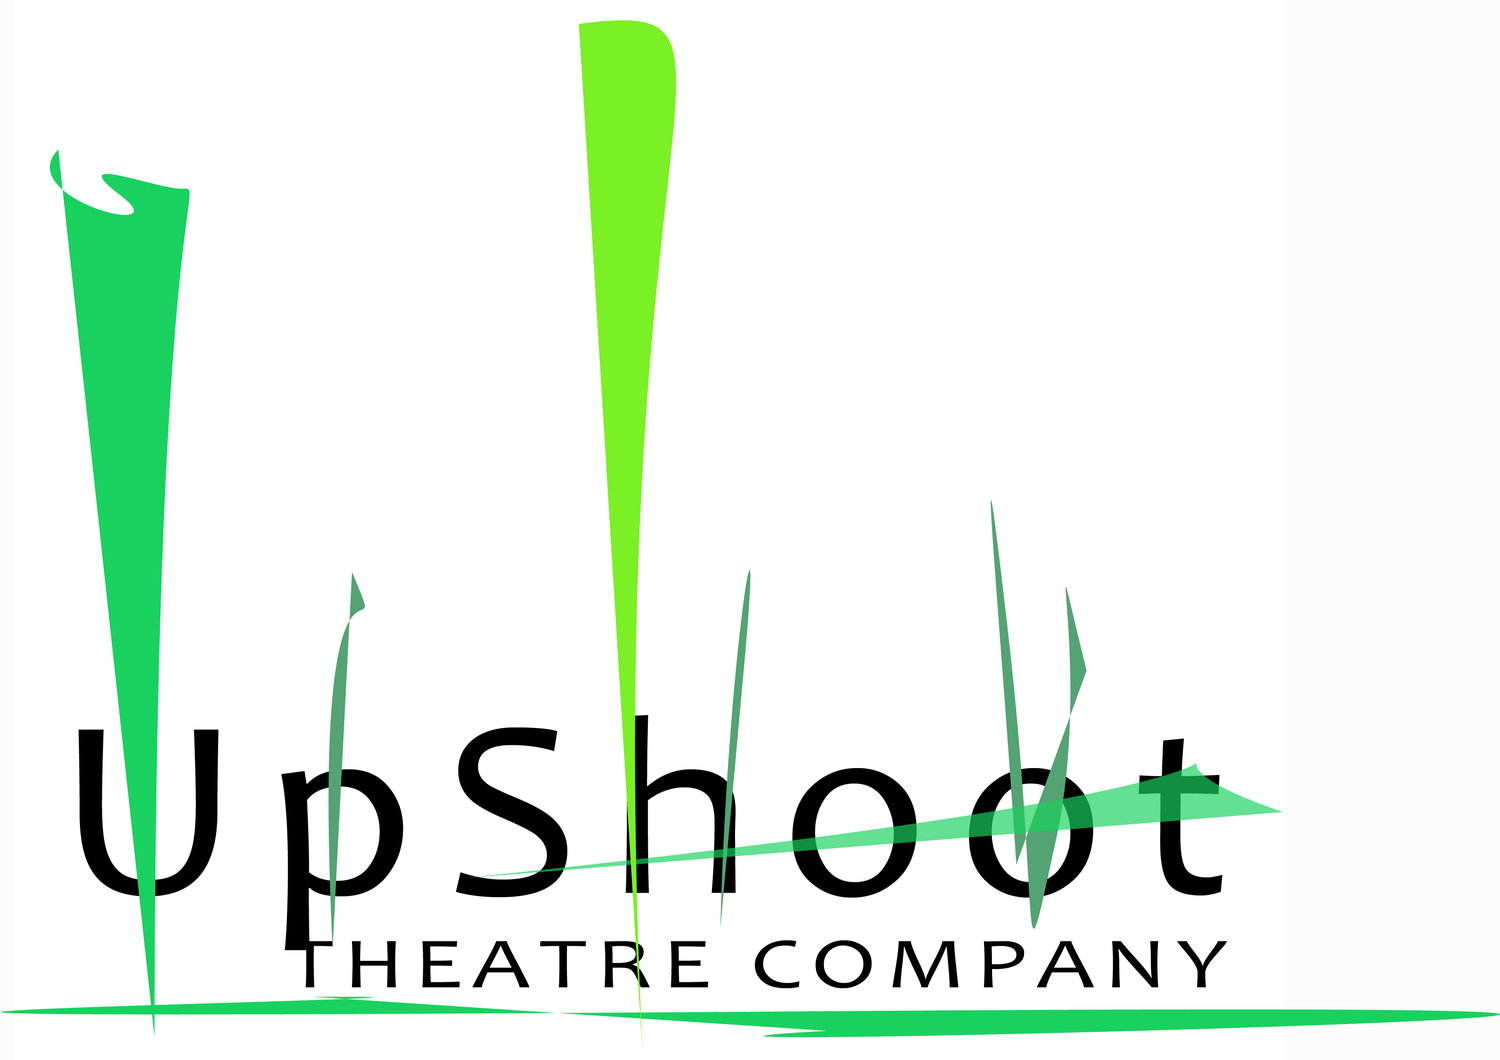 UpShoot Theatre Company